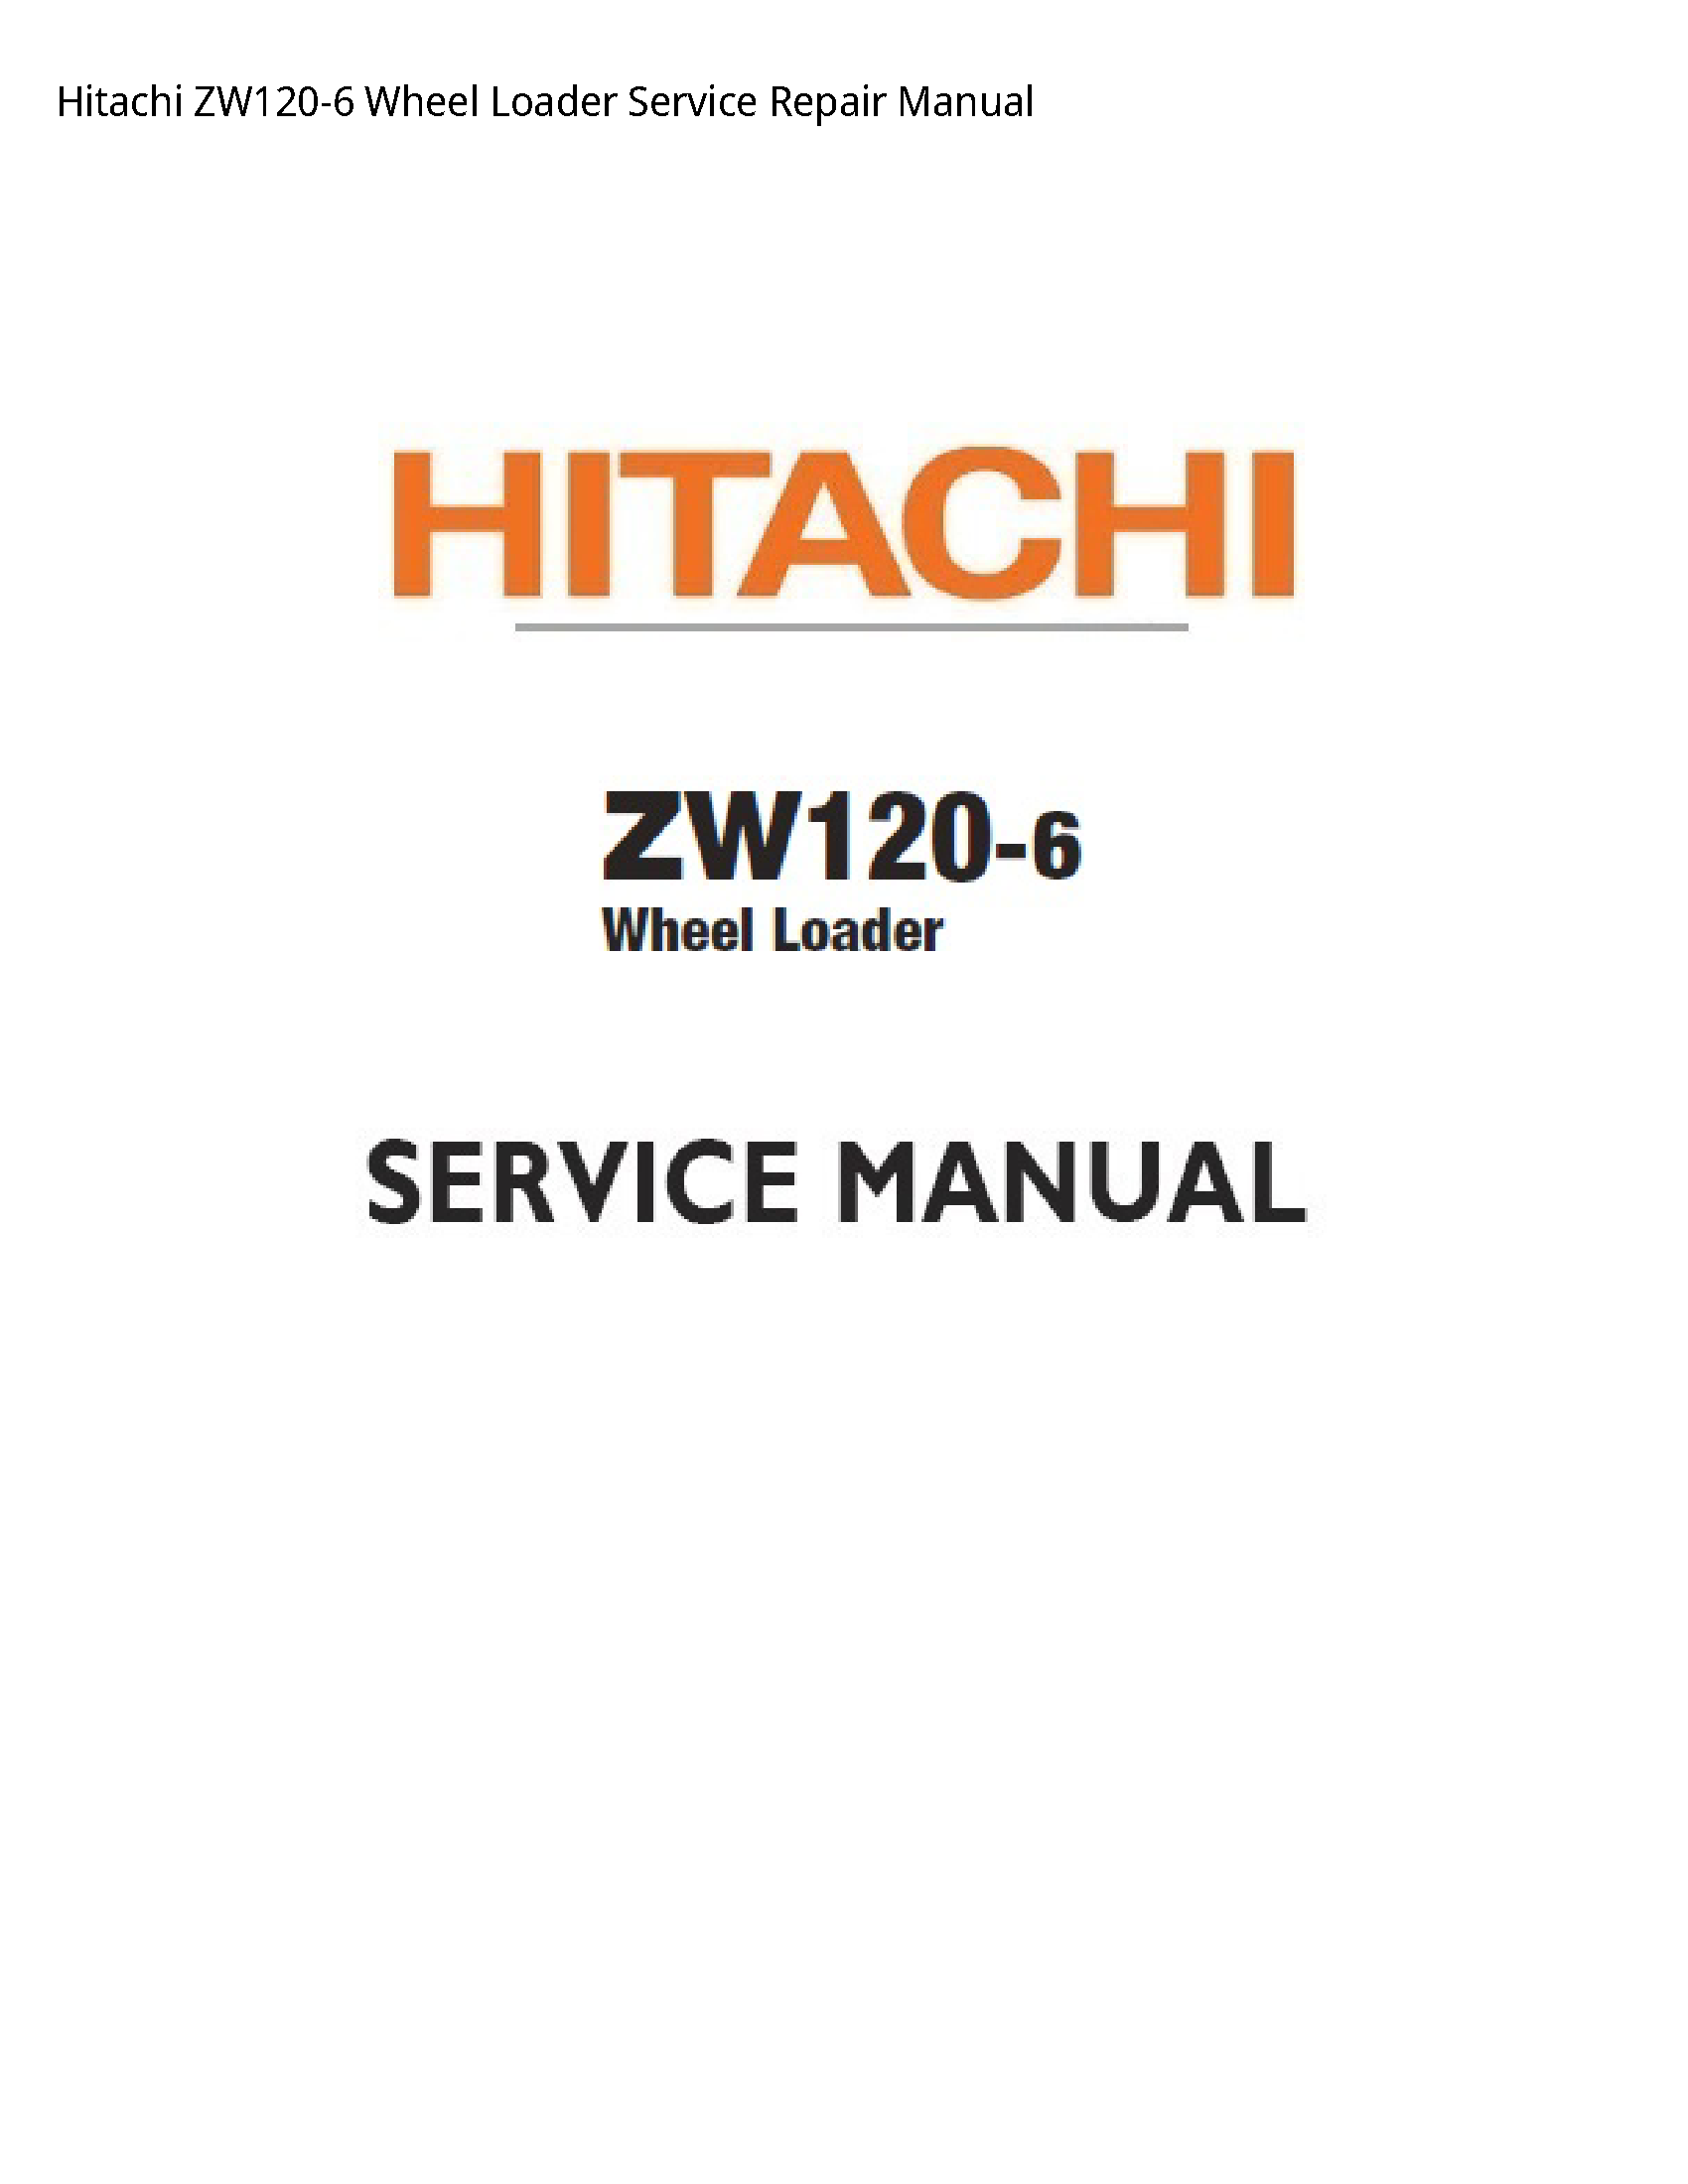 Hitachi ZW120-6 Wheel Loader manual